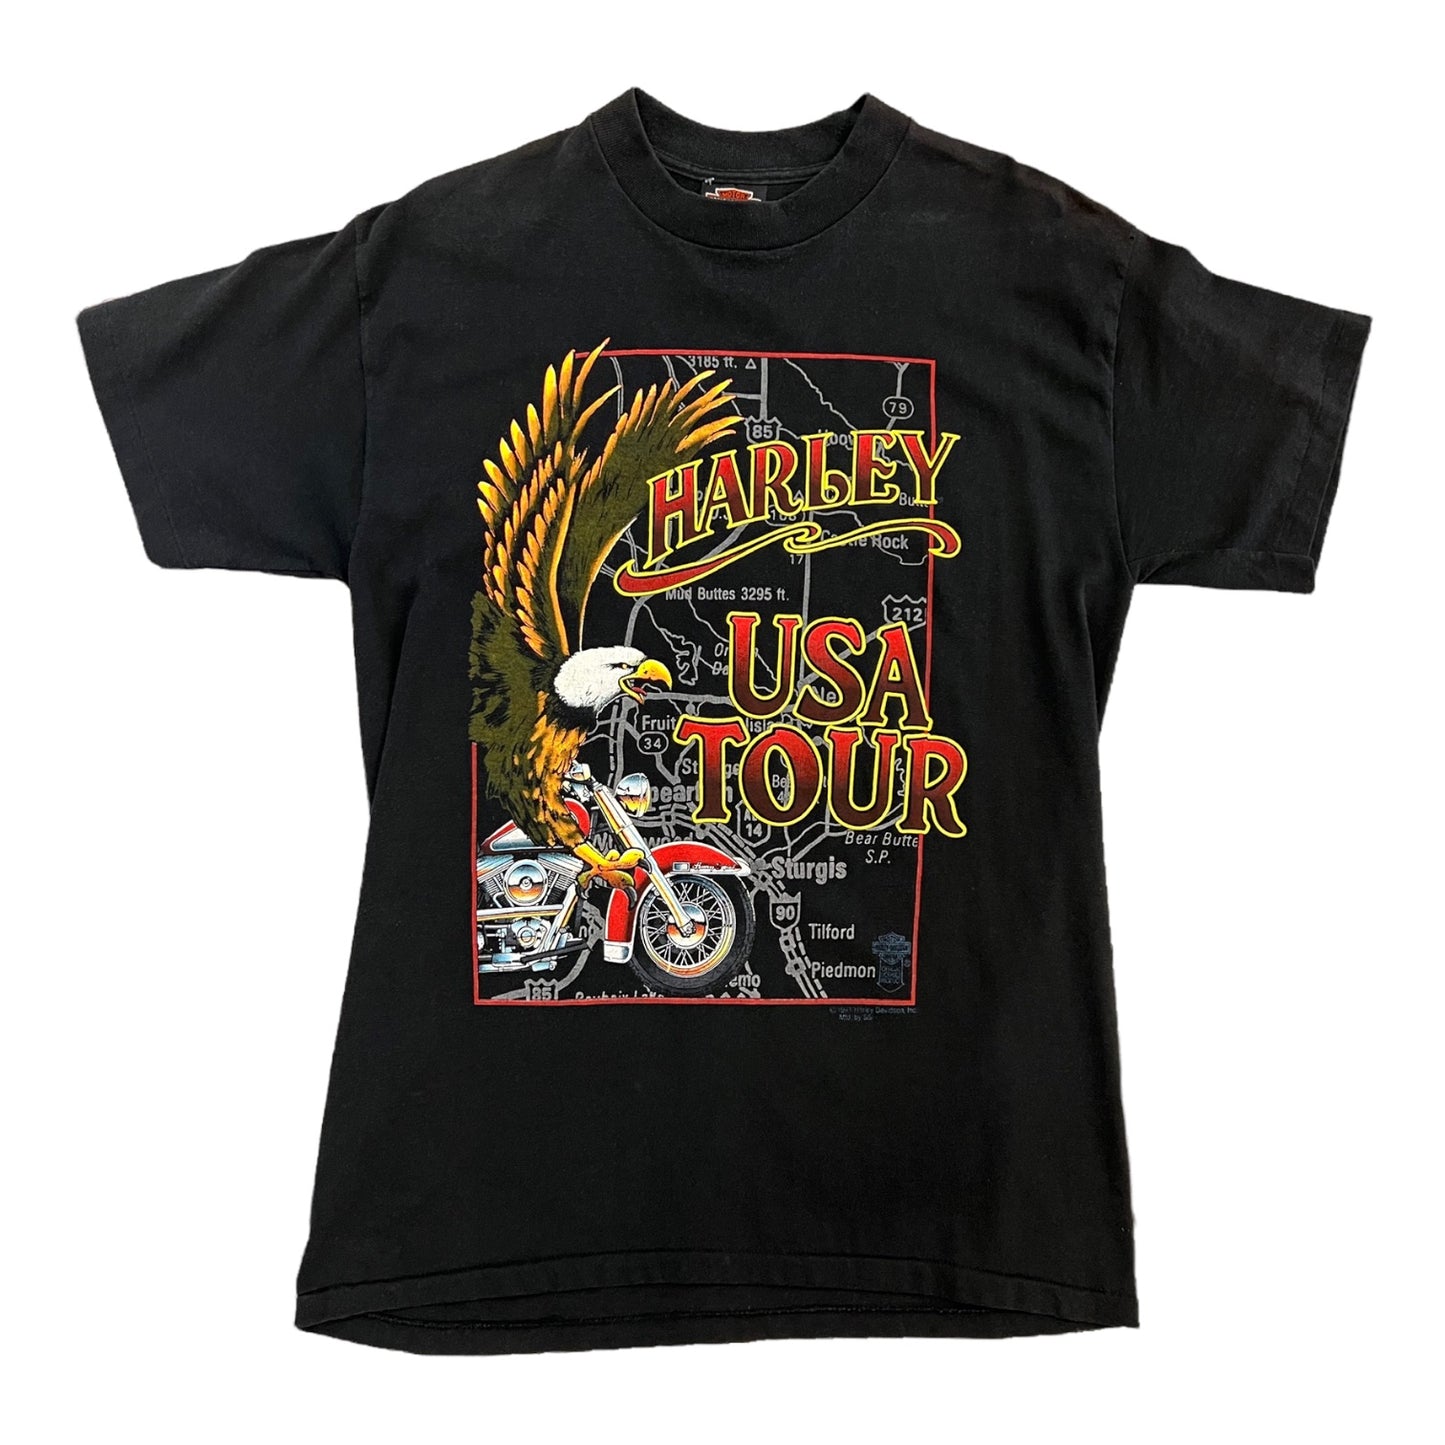 1991 Harley Davidson "Harley USA Tour" vintage graphic tee